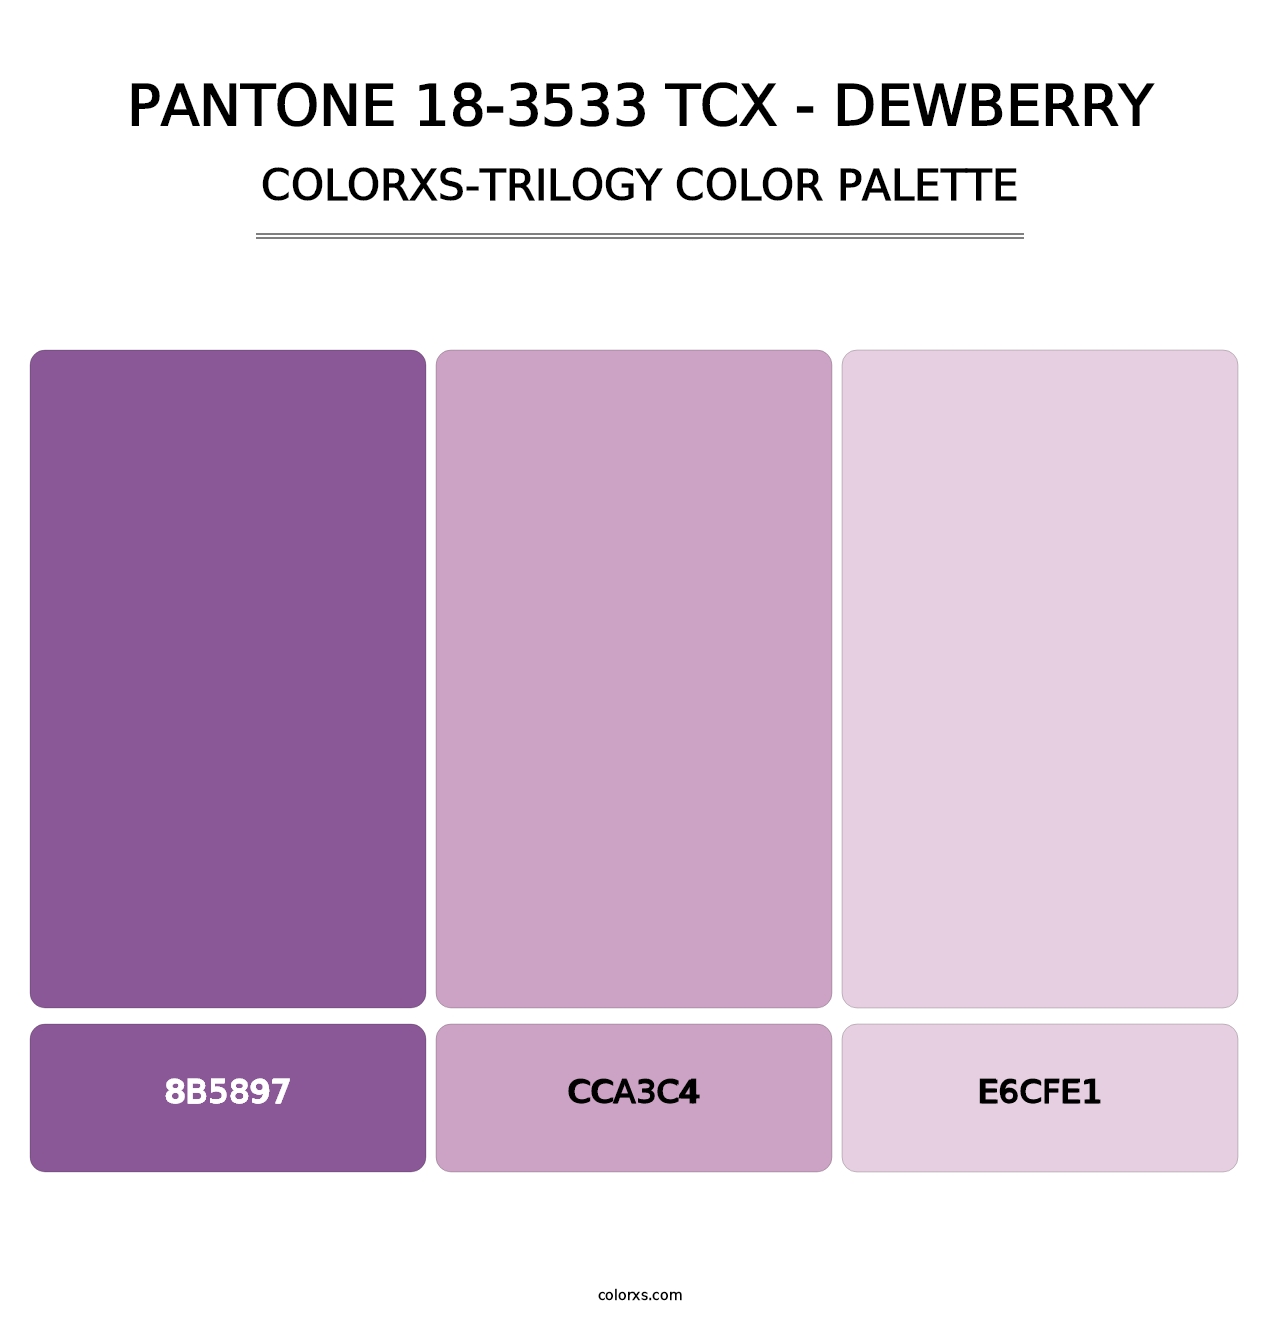 PANTONE 18-3533 TCX - Dewberry - Colorxs Trilogy Palette